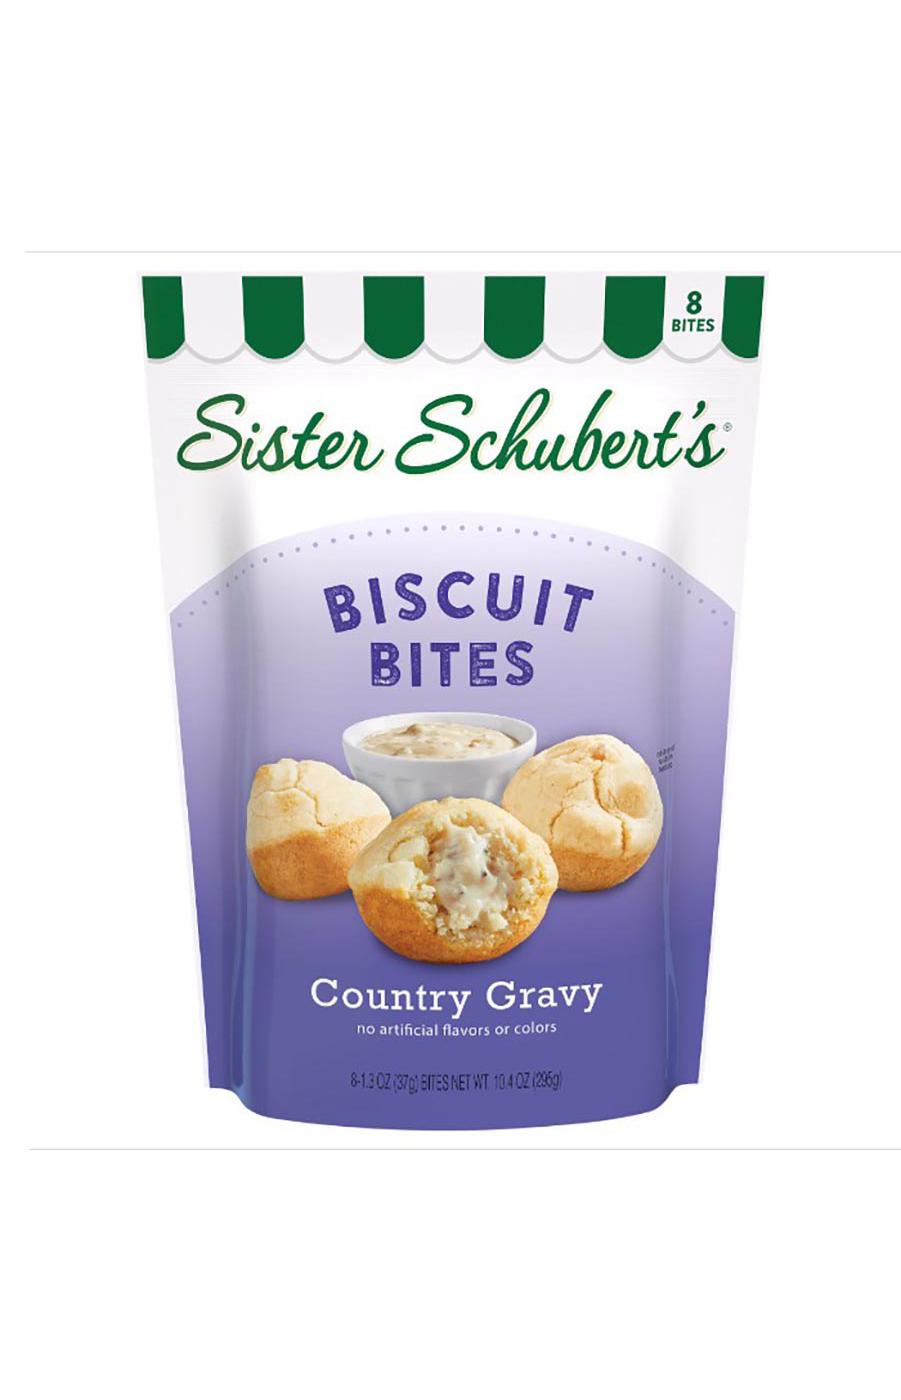 Sister Schubert's Country Gravy Biscuit Bites; image 1 of 2